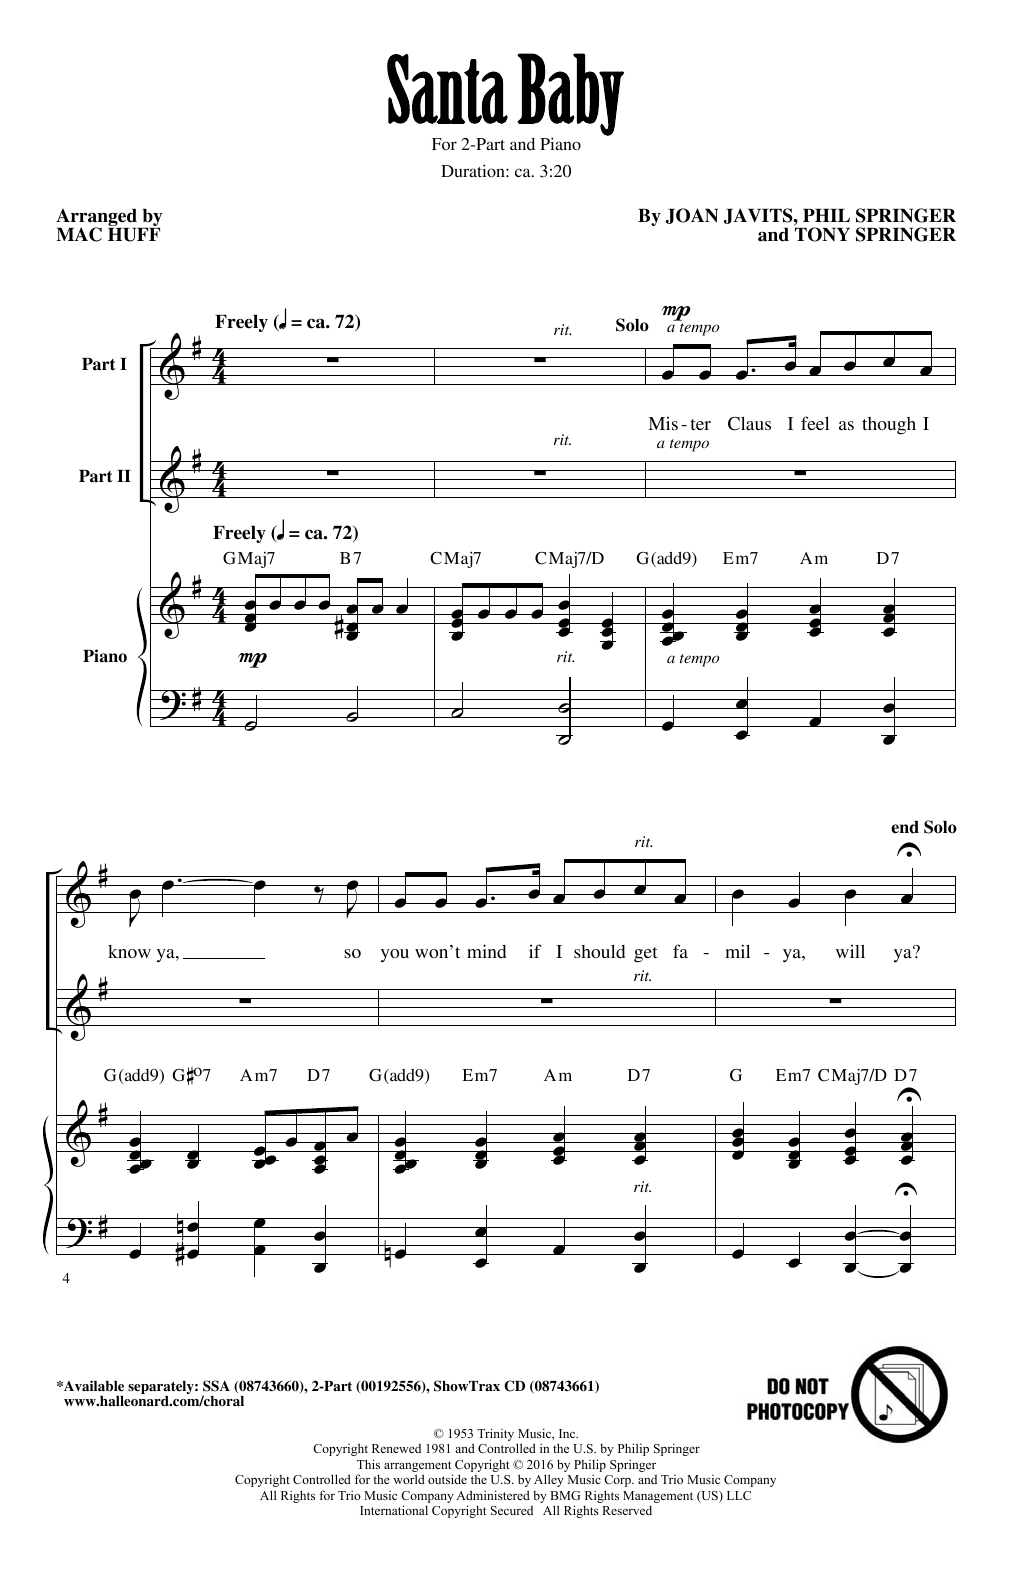 Mac Huff Santa Baby Sheet Music Notes & Chords for 2-Part Choir - Download or Print PDF